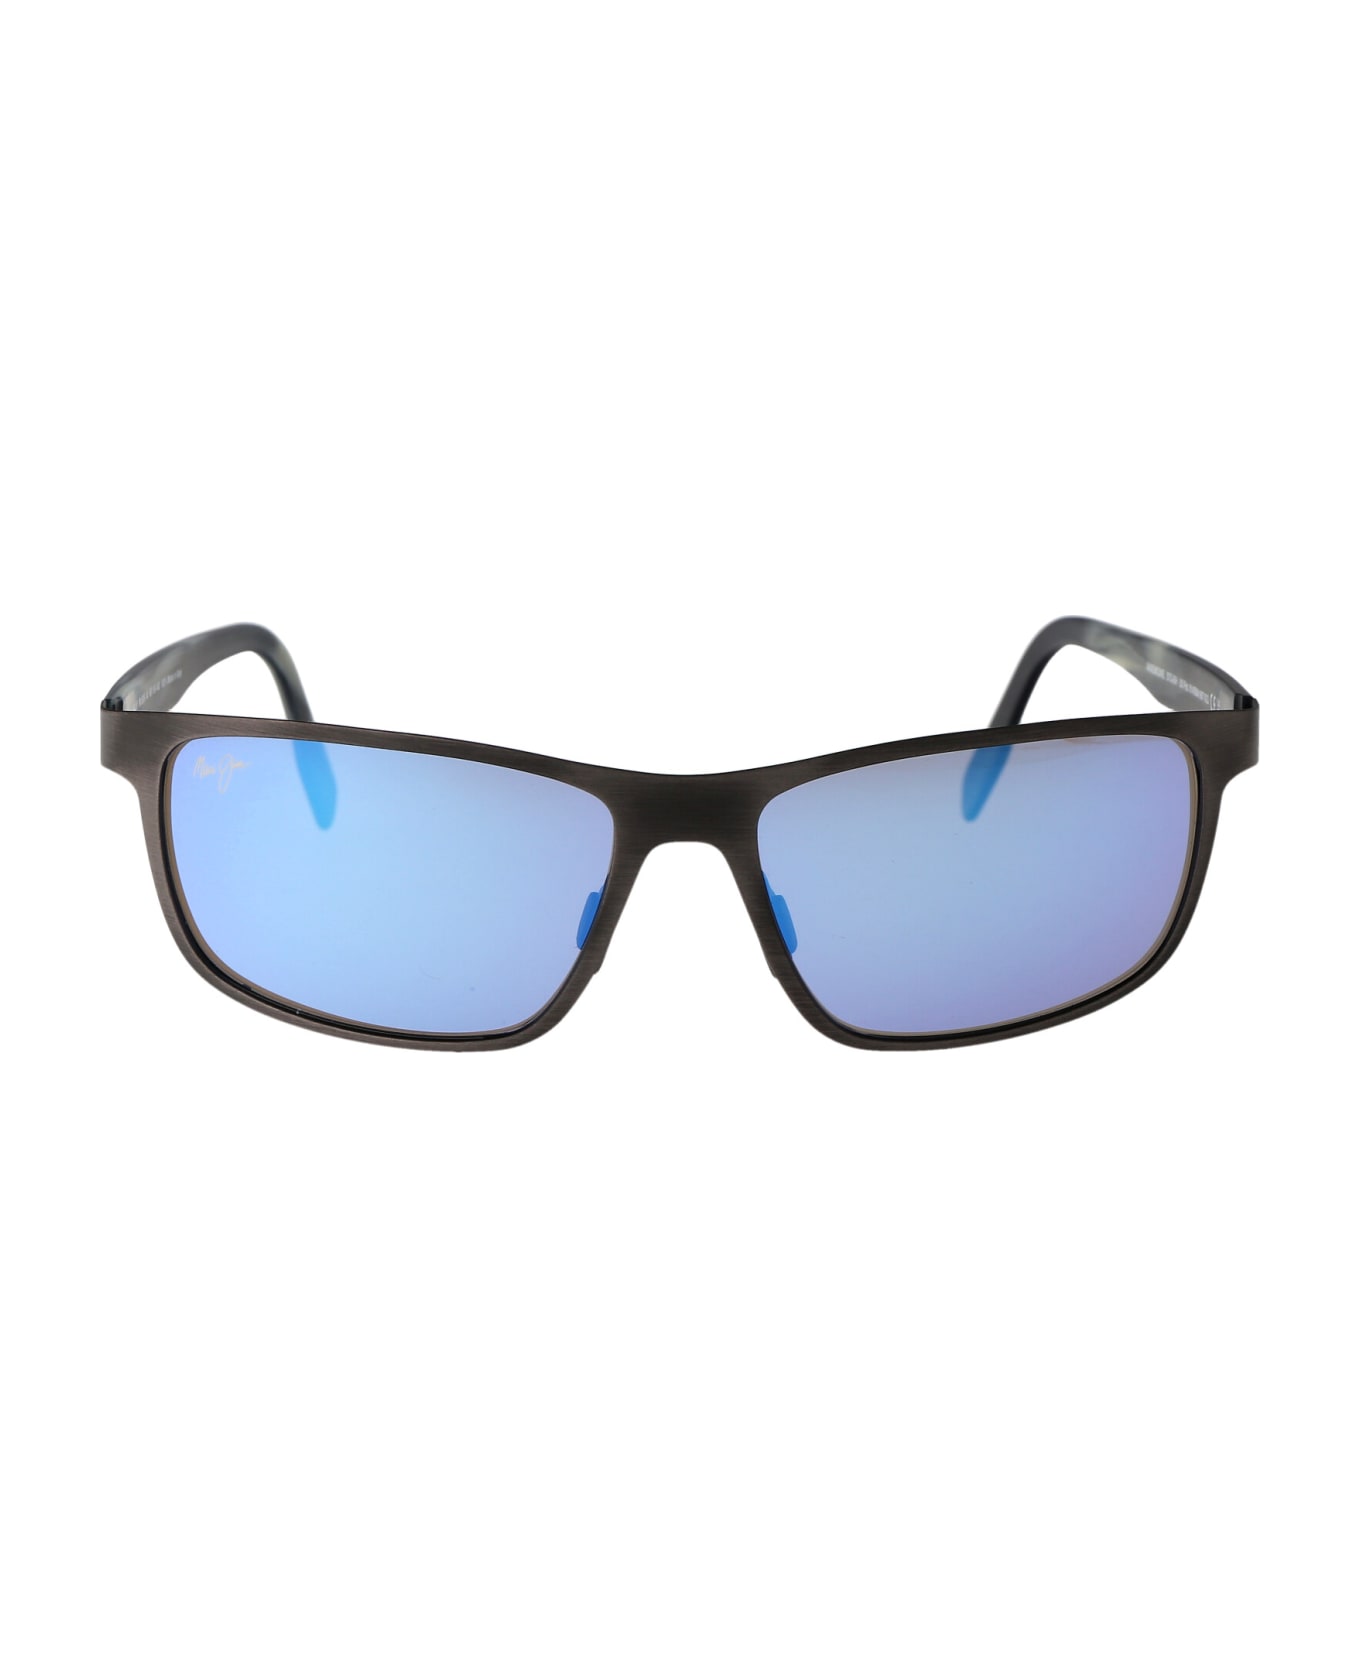 Maui Jim Anemone Sunglasses - 14 BLUE HAWAII ANEMONE BRUSHED DARK GUNMETAL